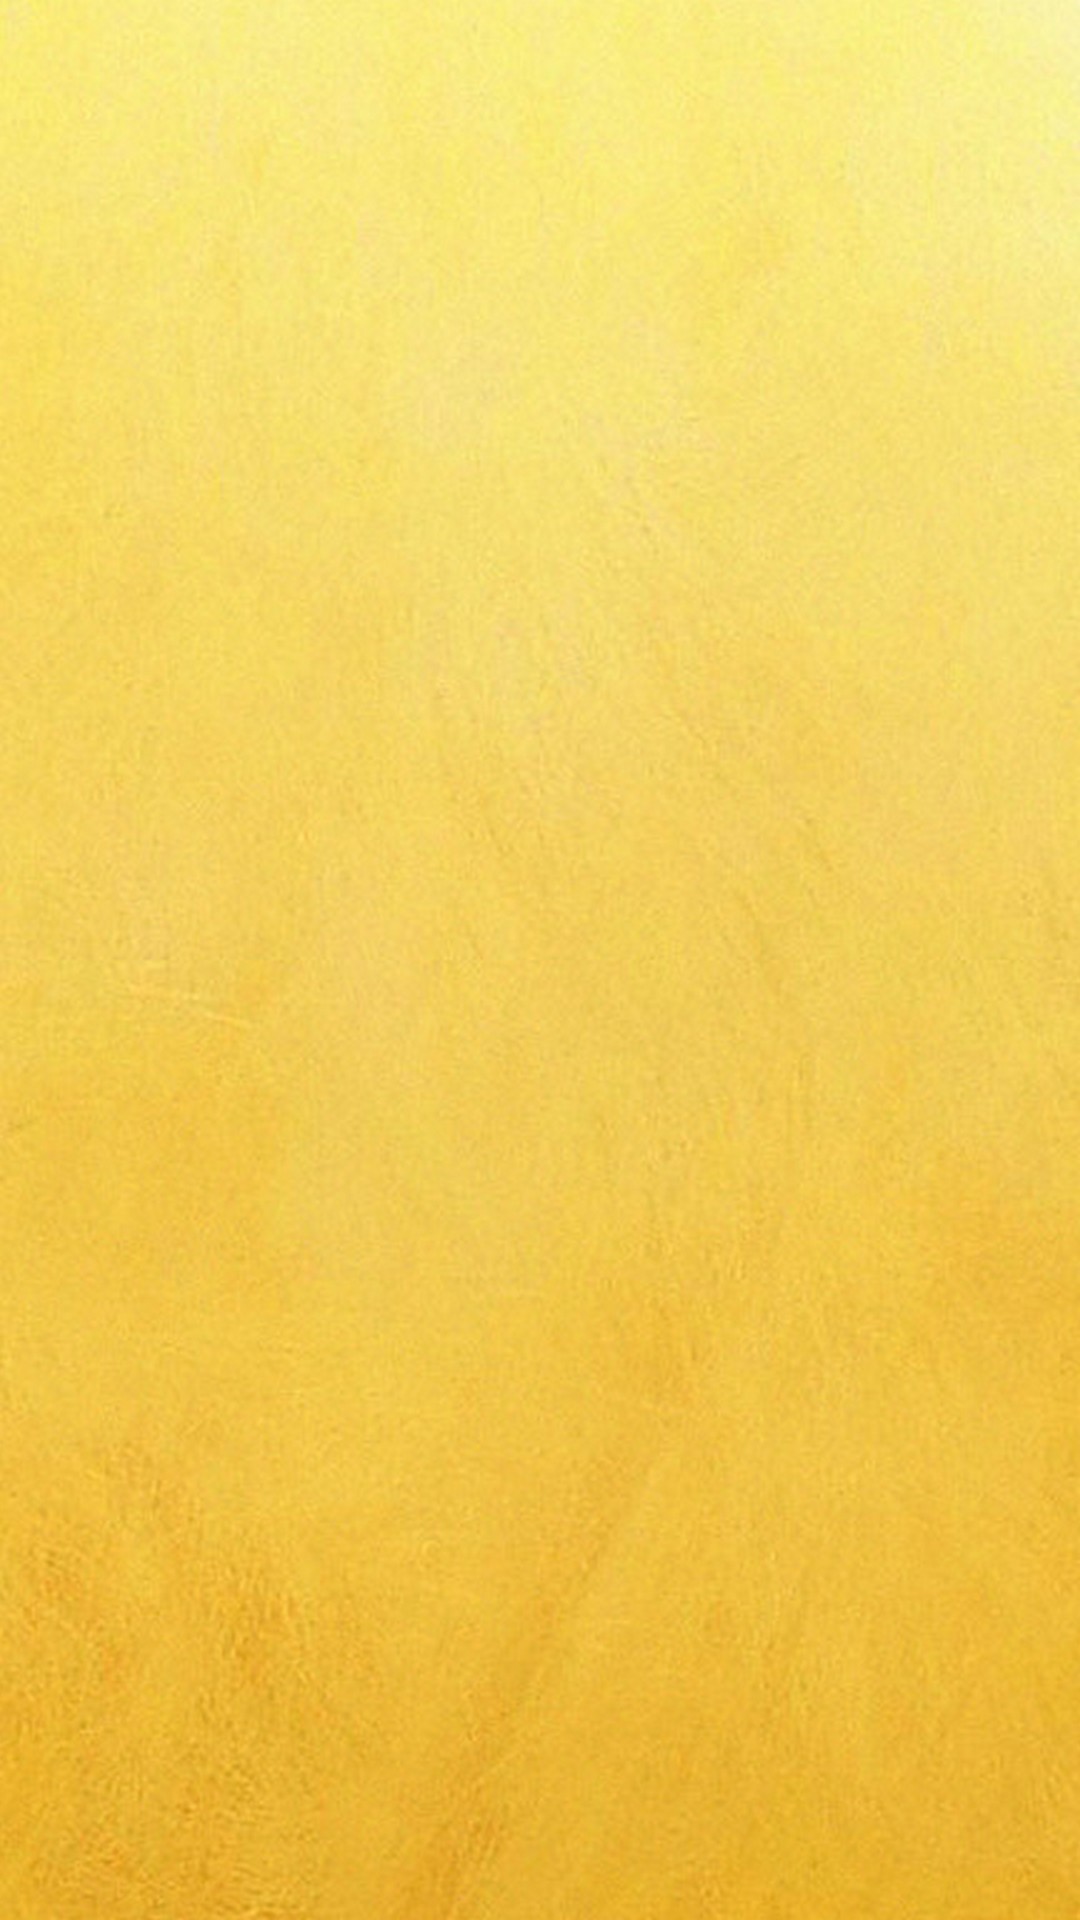 Wallpaper iPhone Plain Gold resolution 1080x1920